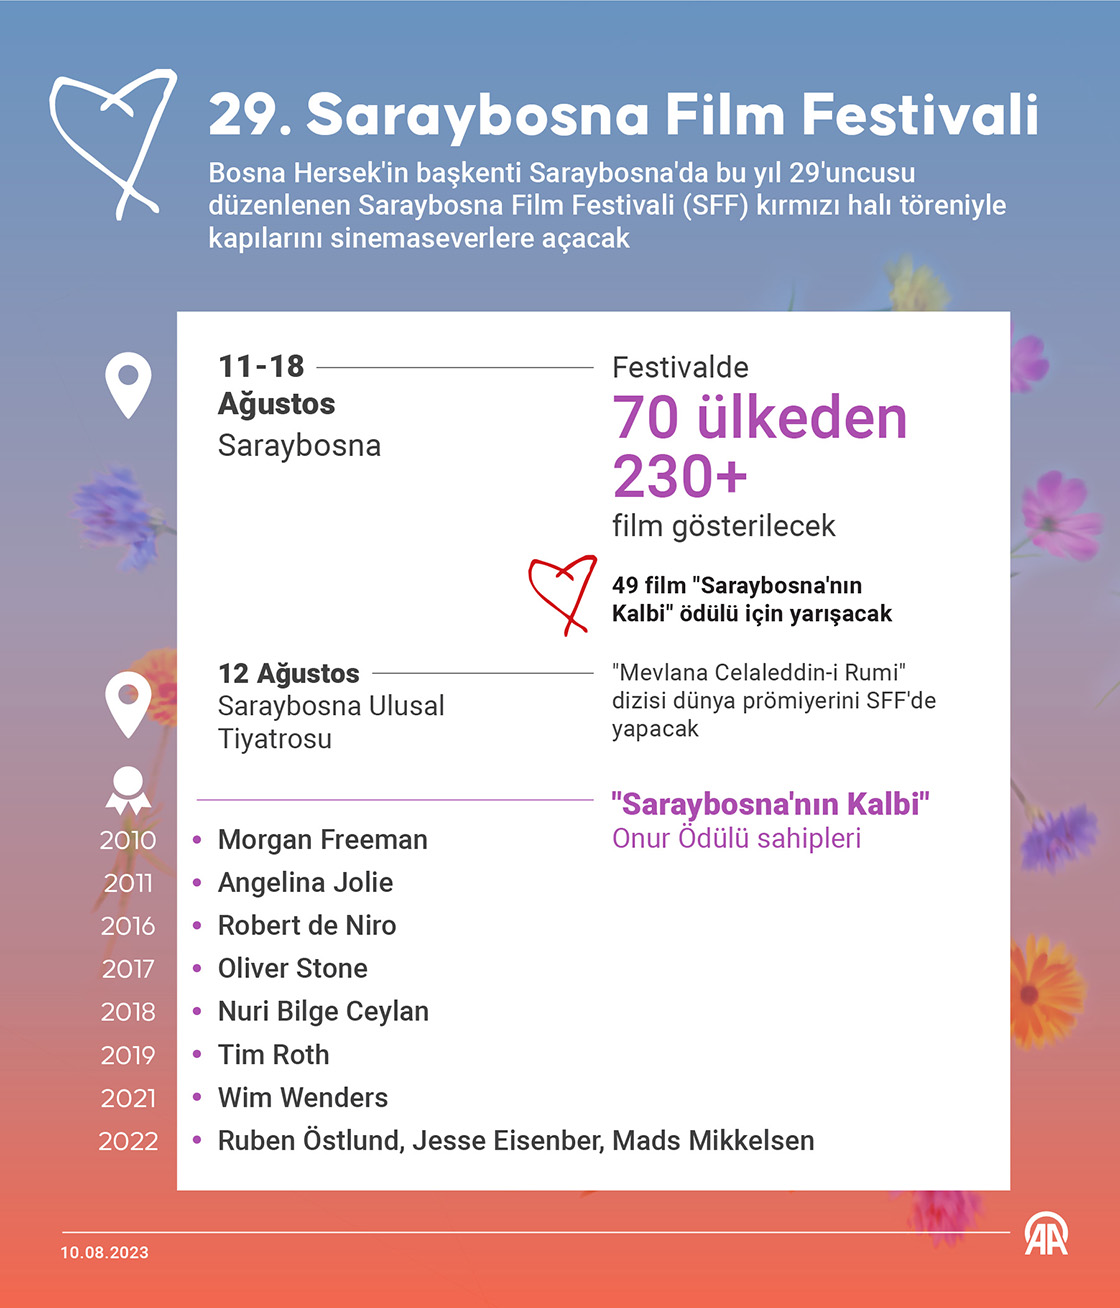 29. Saraybosna Film Festivali